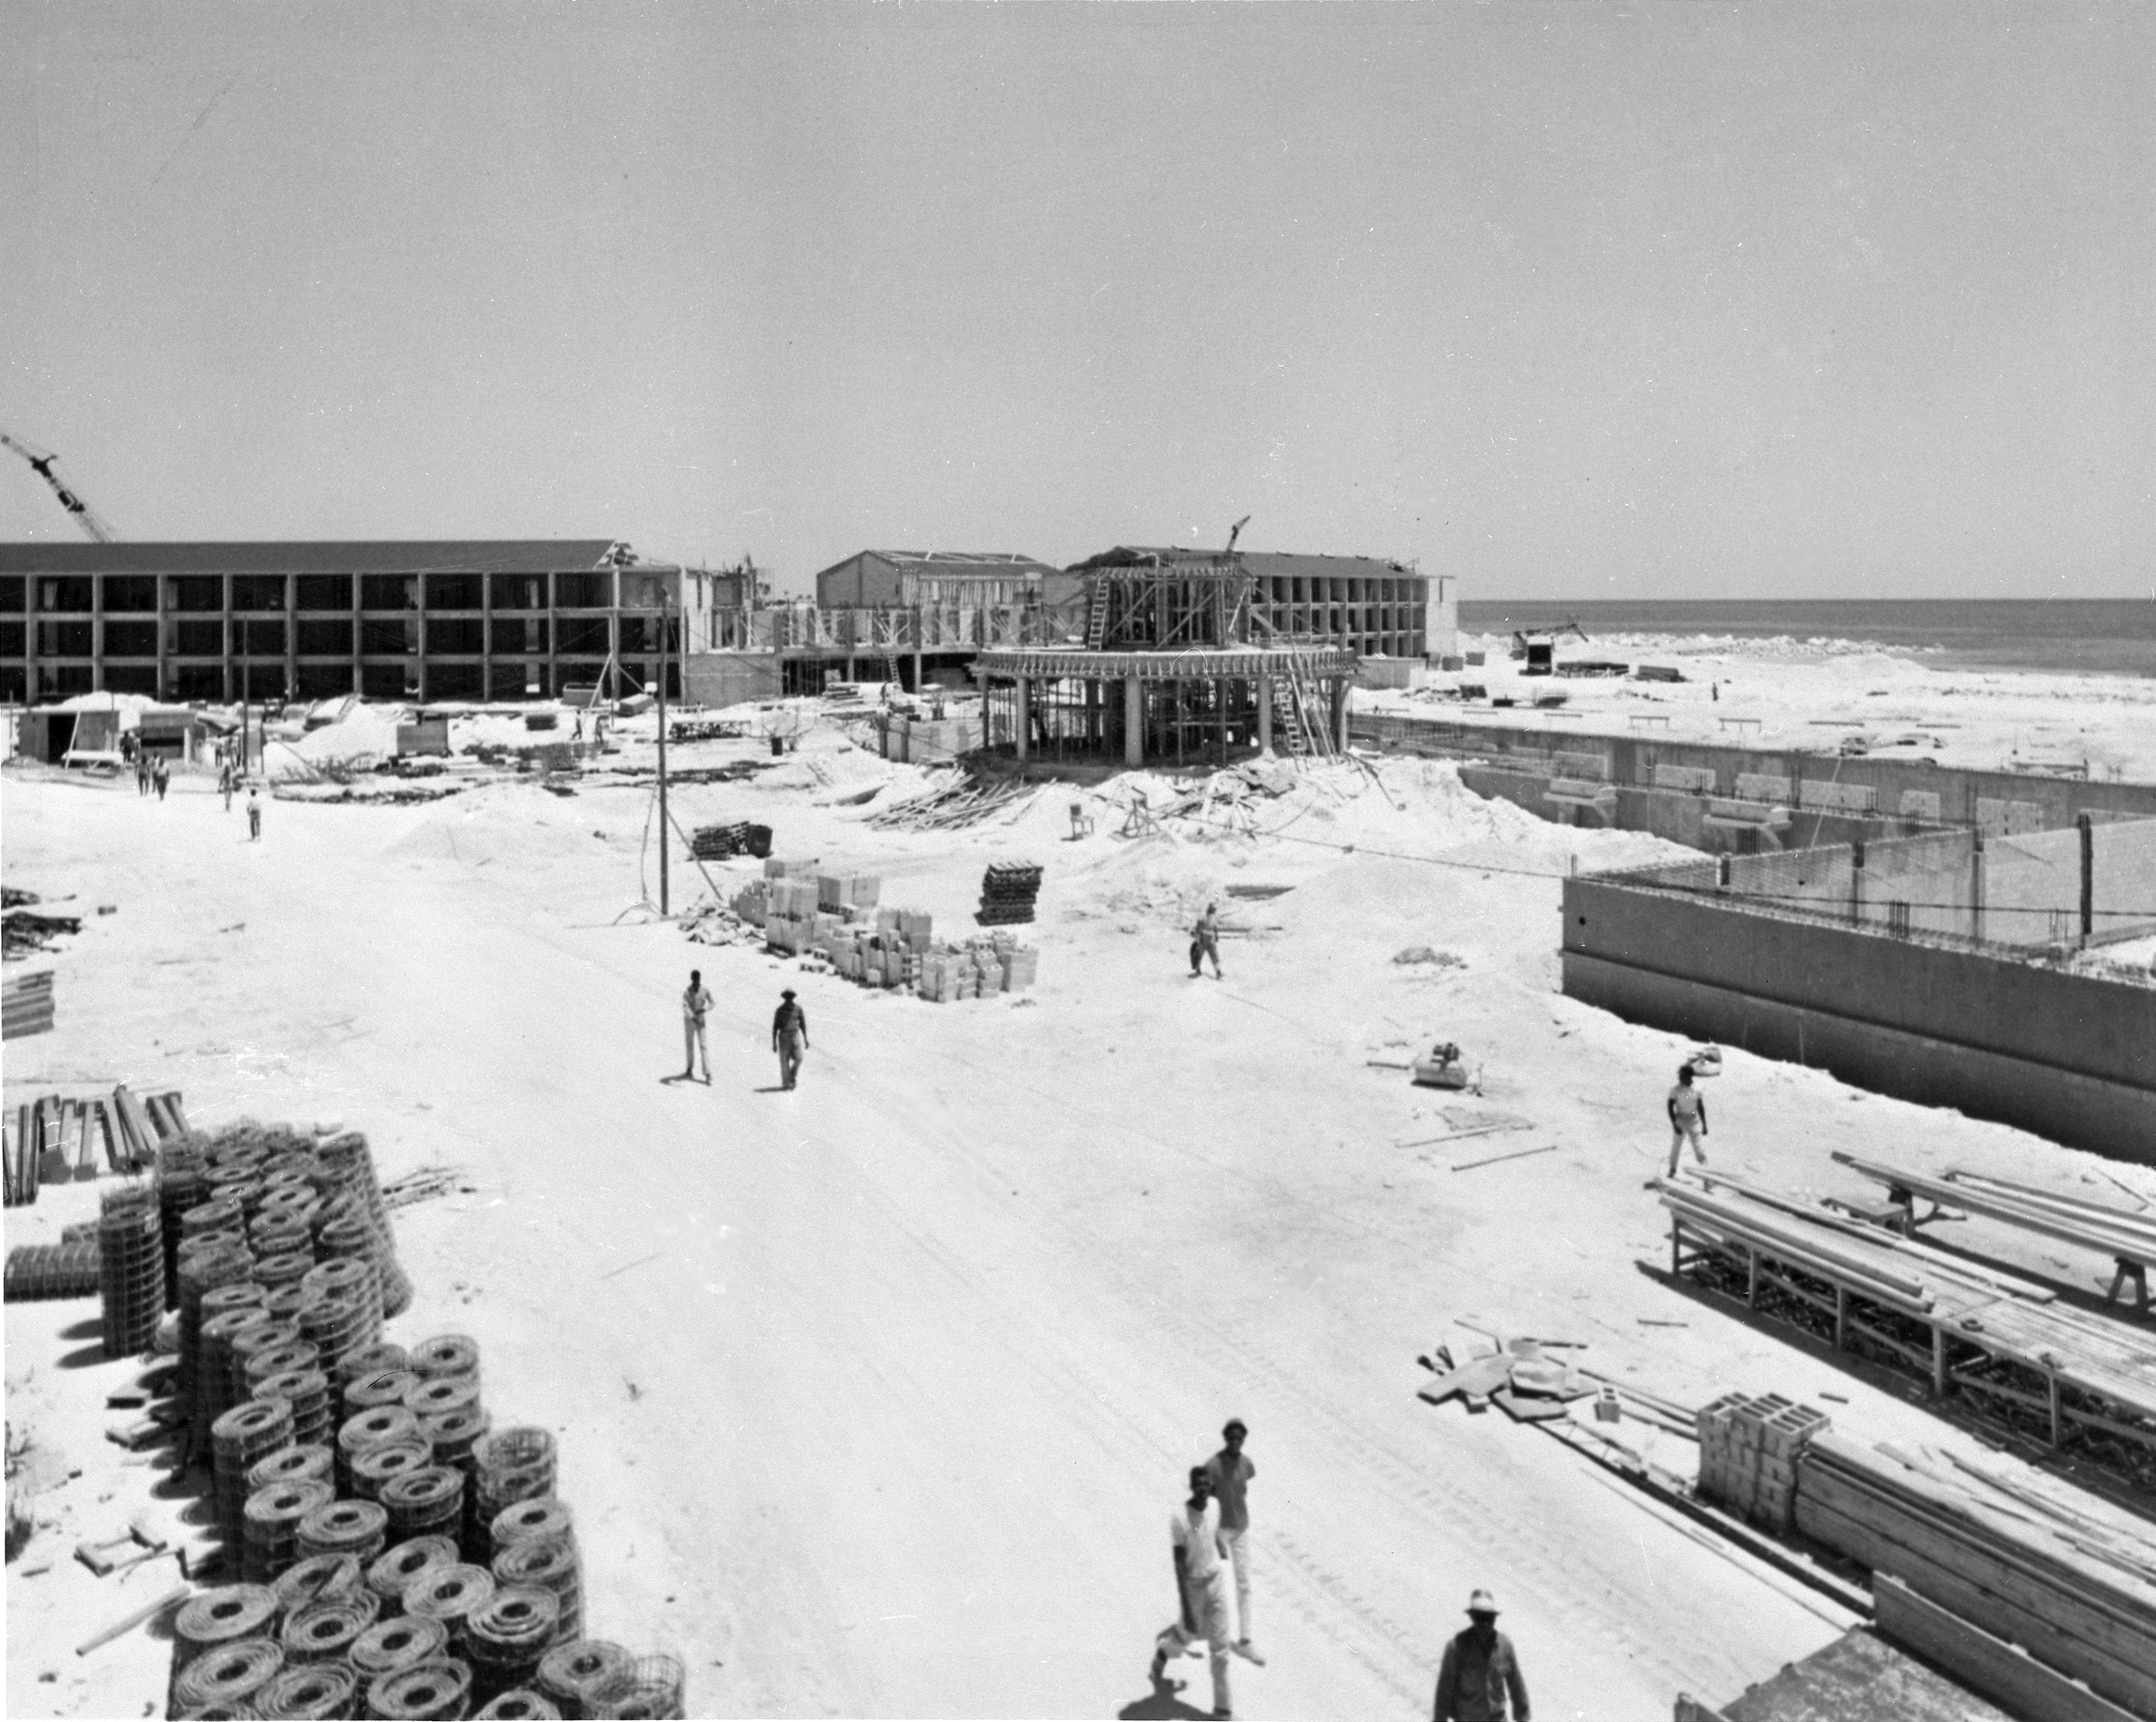 Lucayan Beach Hotel under construction, April 1963